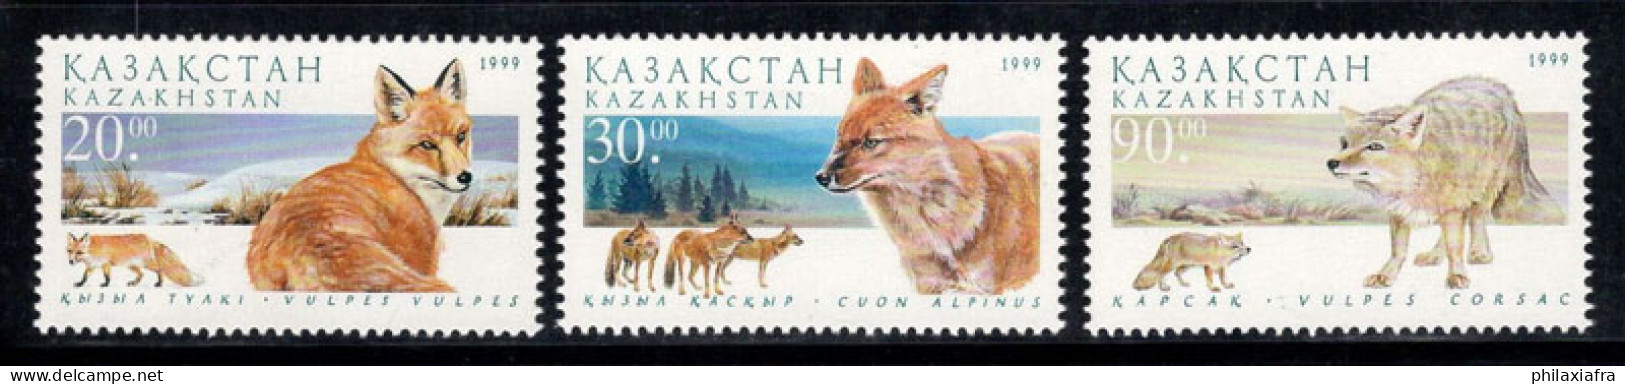 Kazakhstan 1999 Mi. 264-266 Neuf ** 100% Renard, Faune, Animaux - Kazakistan